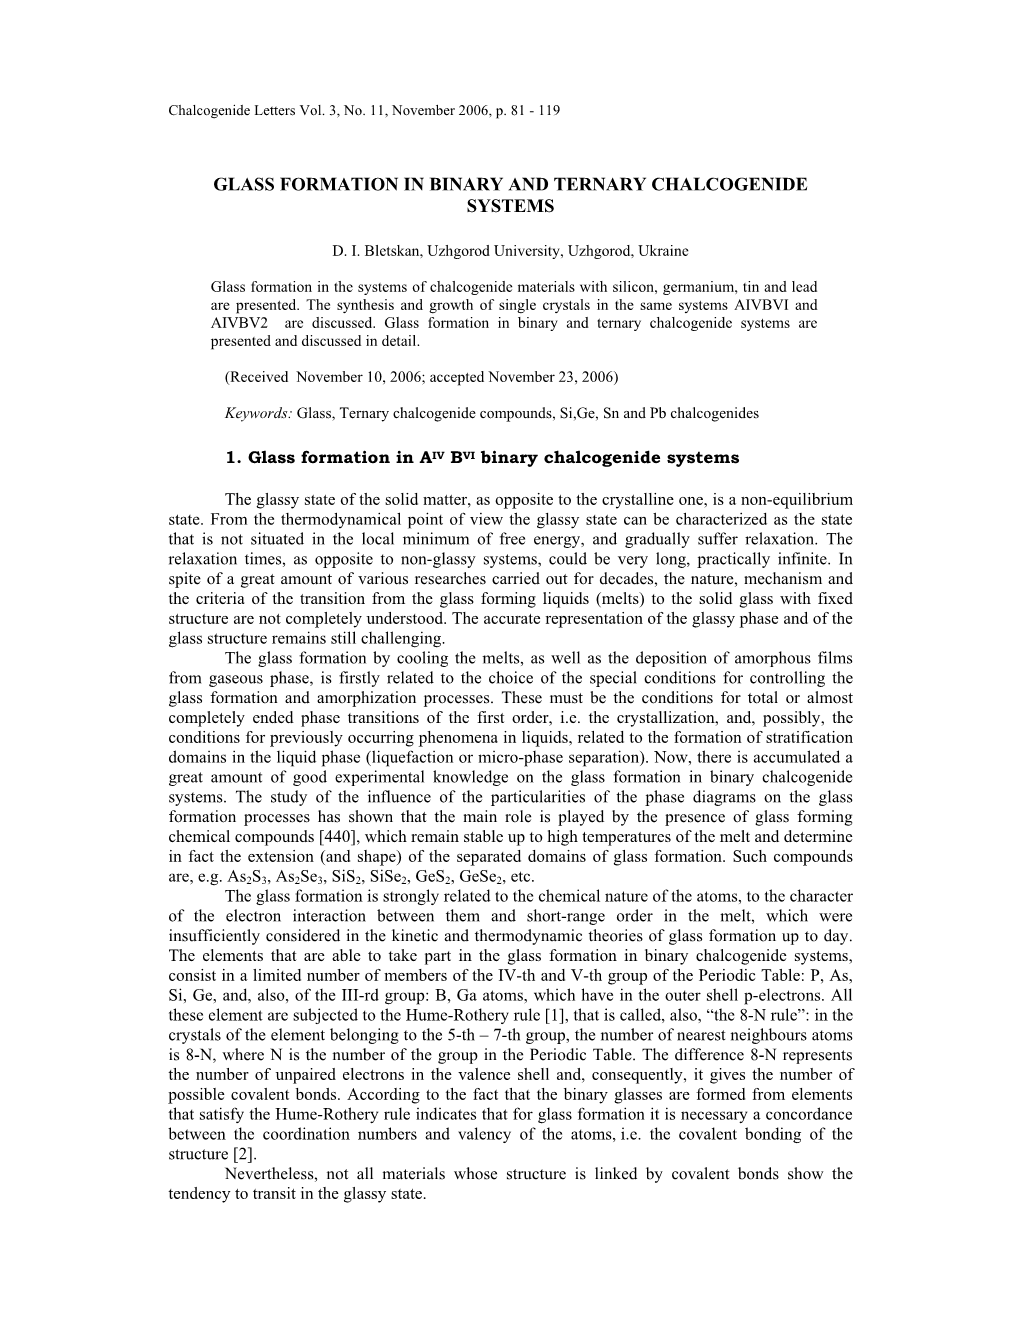 D. I. Bletskan " Glass Formation in Binary and Ternary Chalcogenide